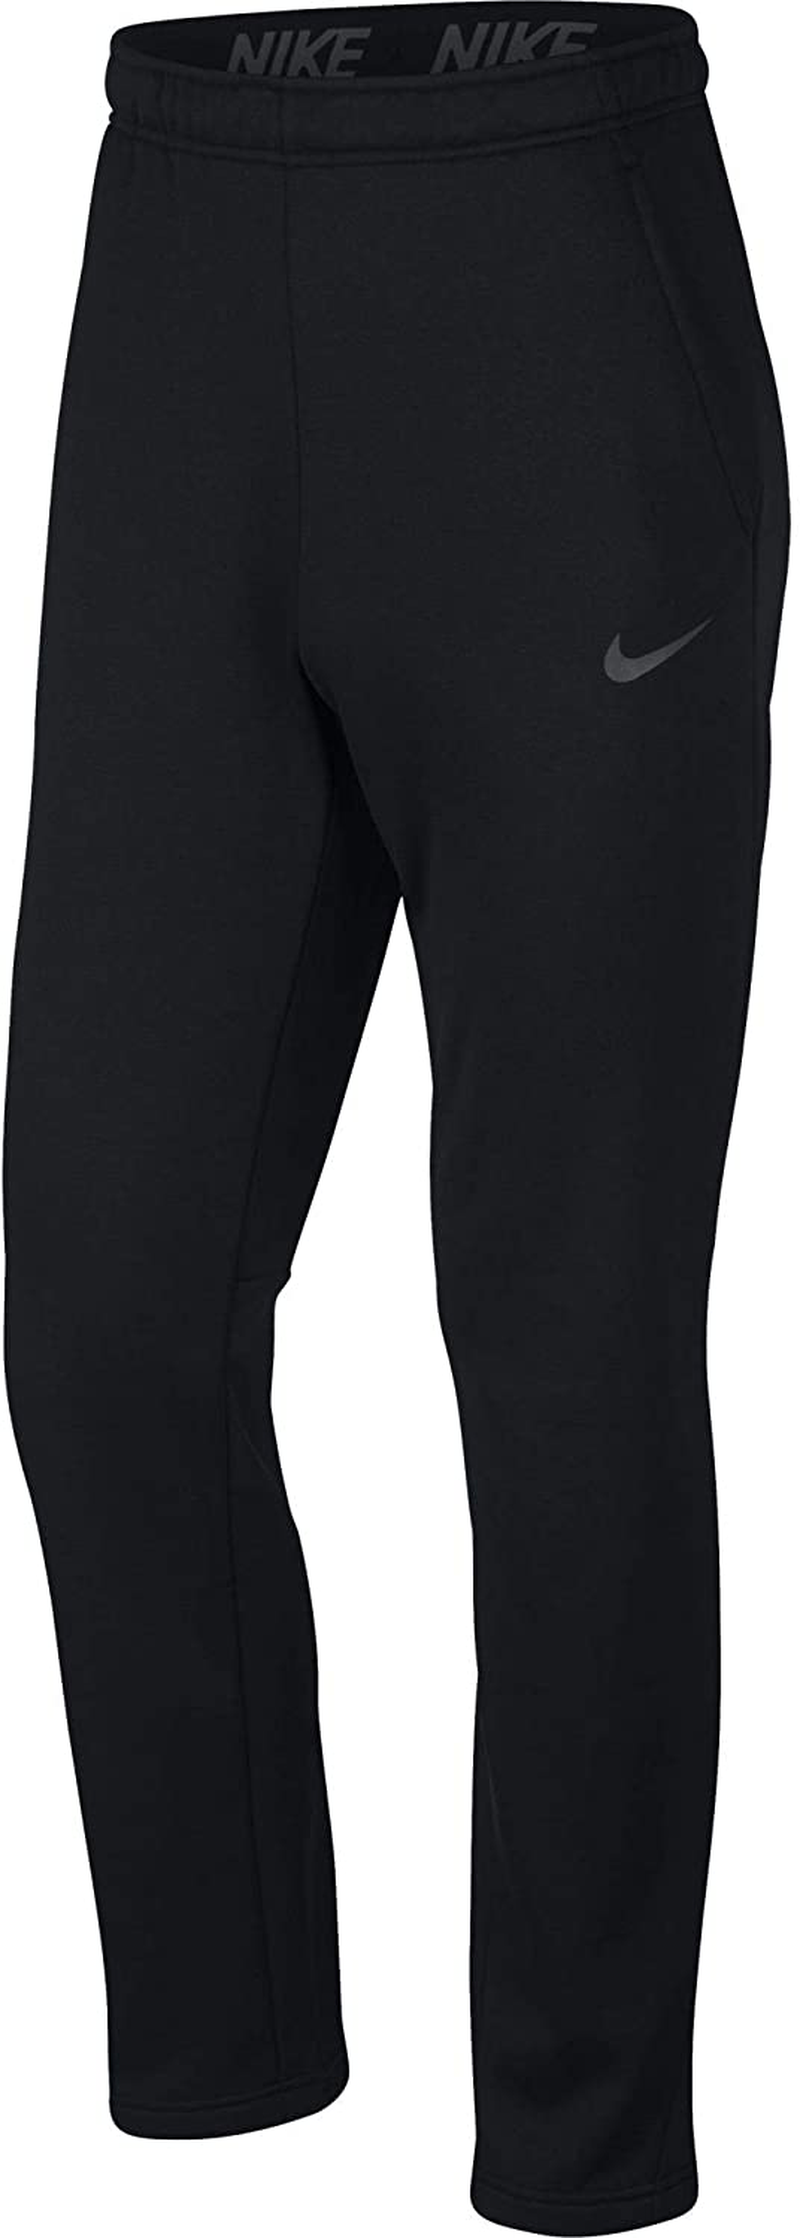 Nike Dri-Fit Therma Black/Metallic Hematite Men's Training Pants 932253-010